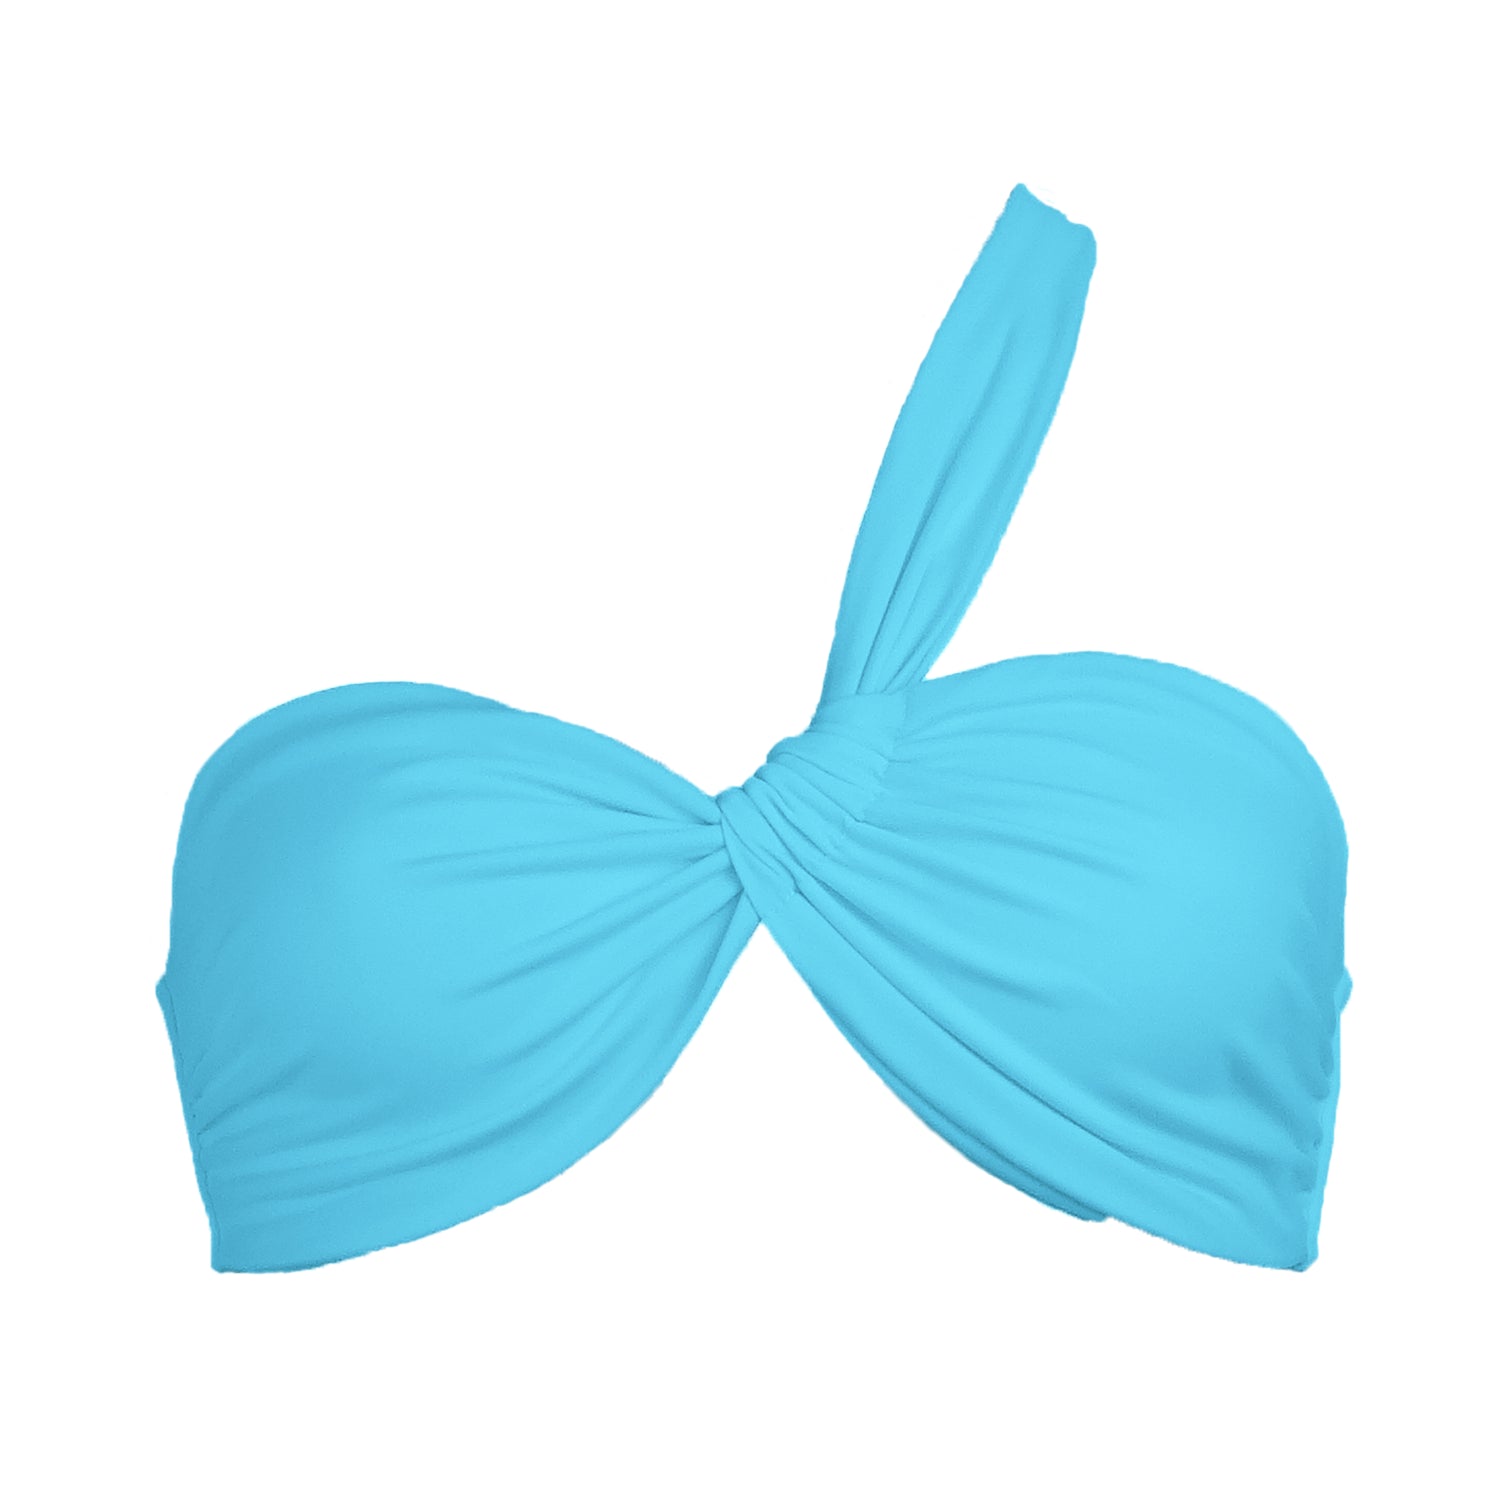 Acqua blue asymmetrical strap bikini top with adjustable tie back strap.